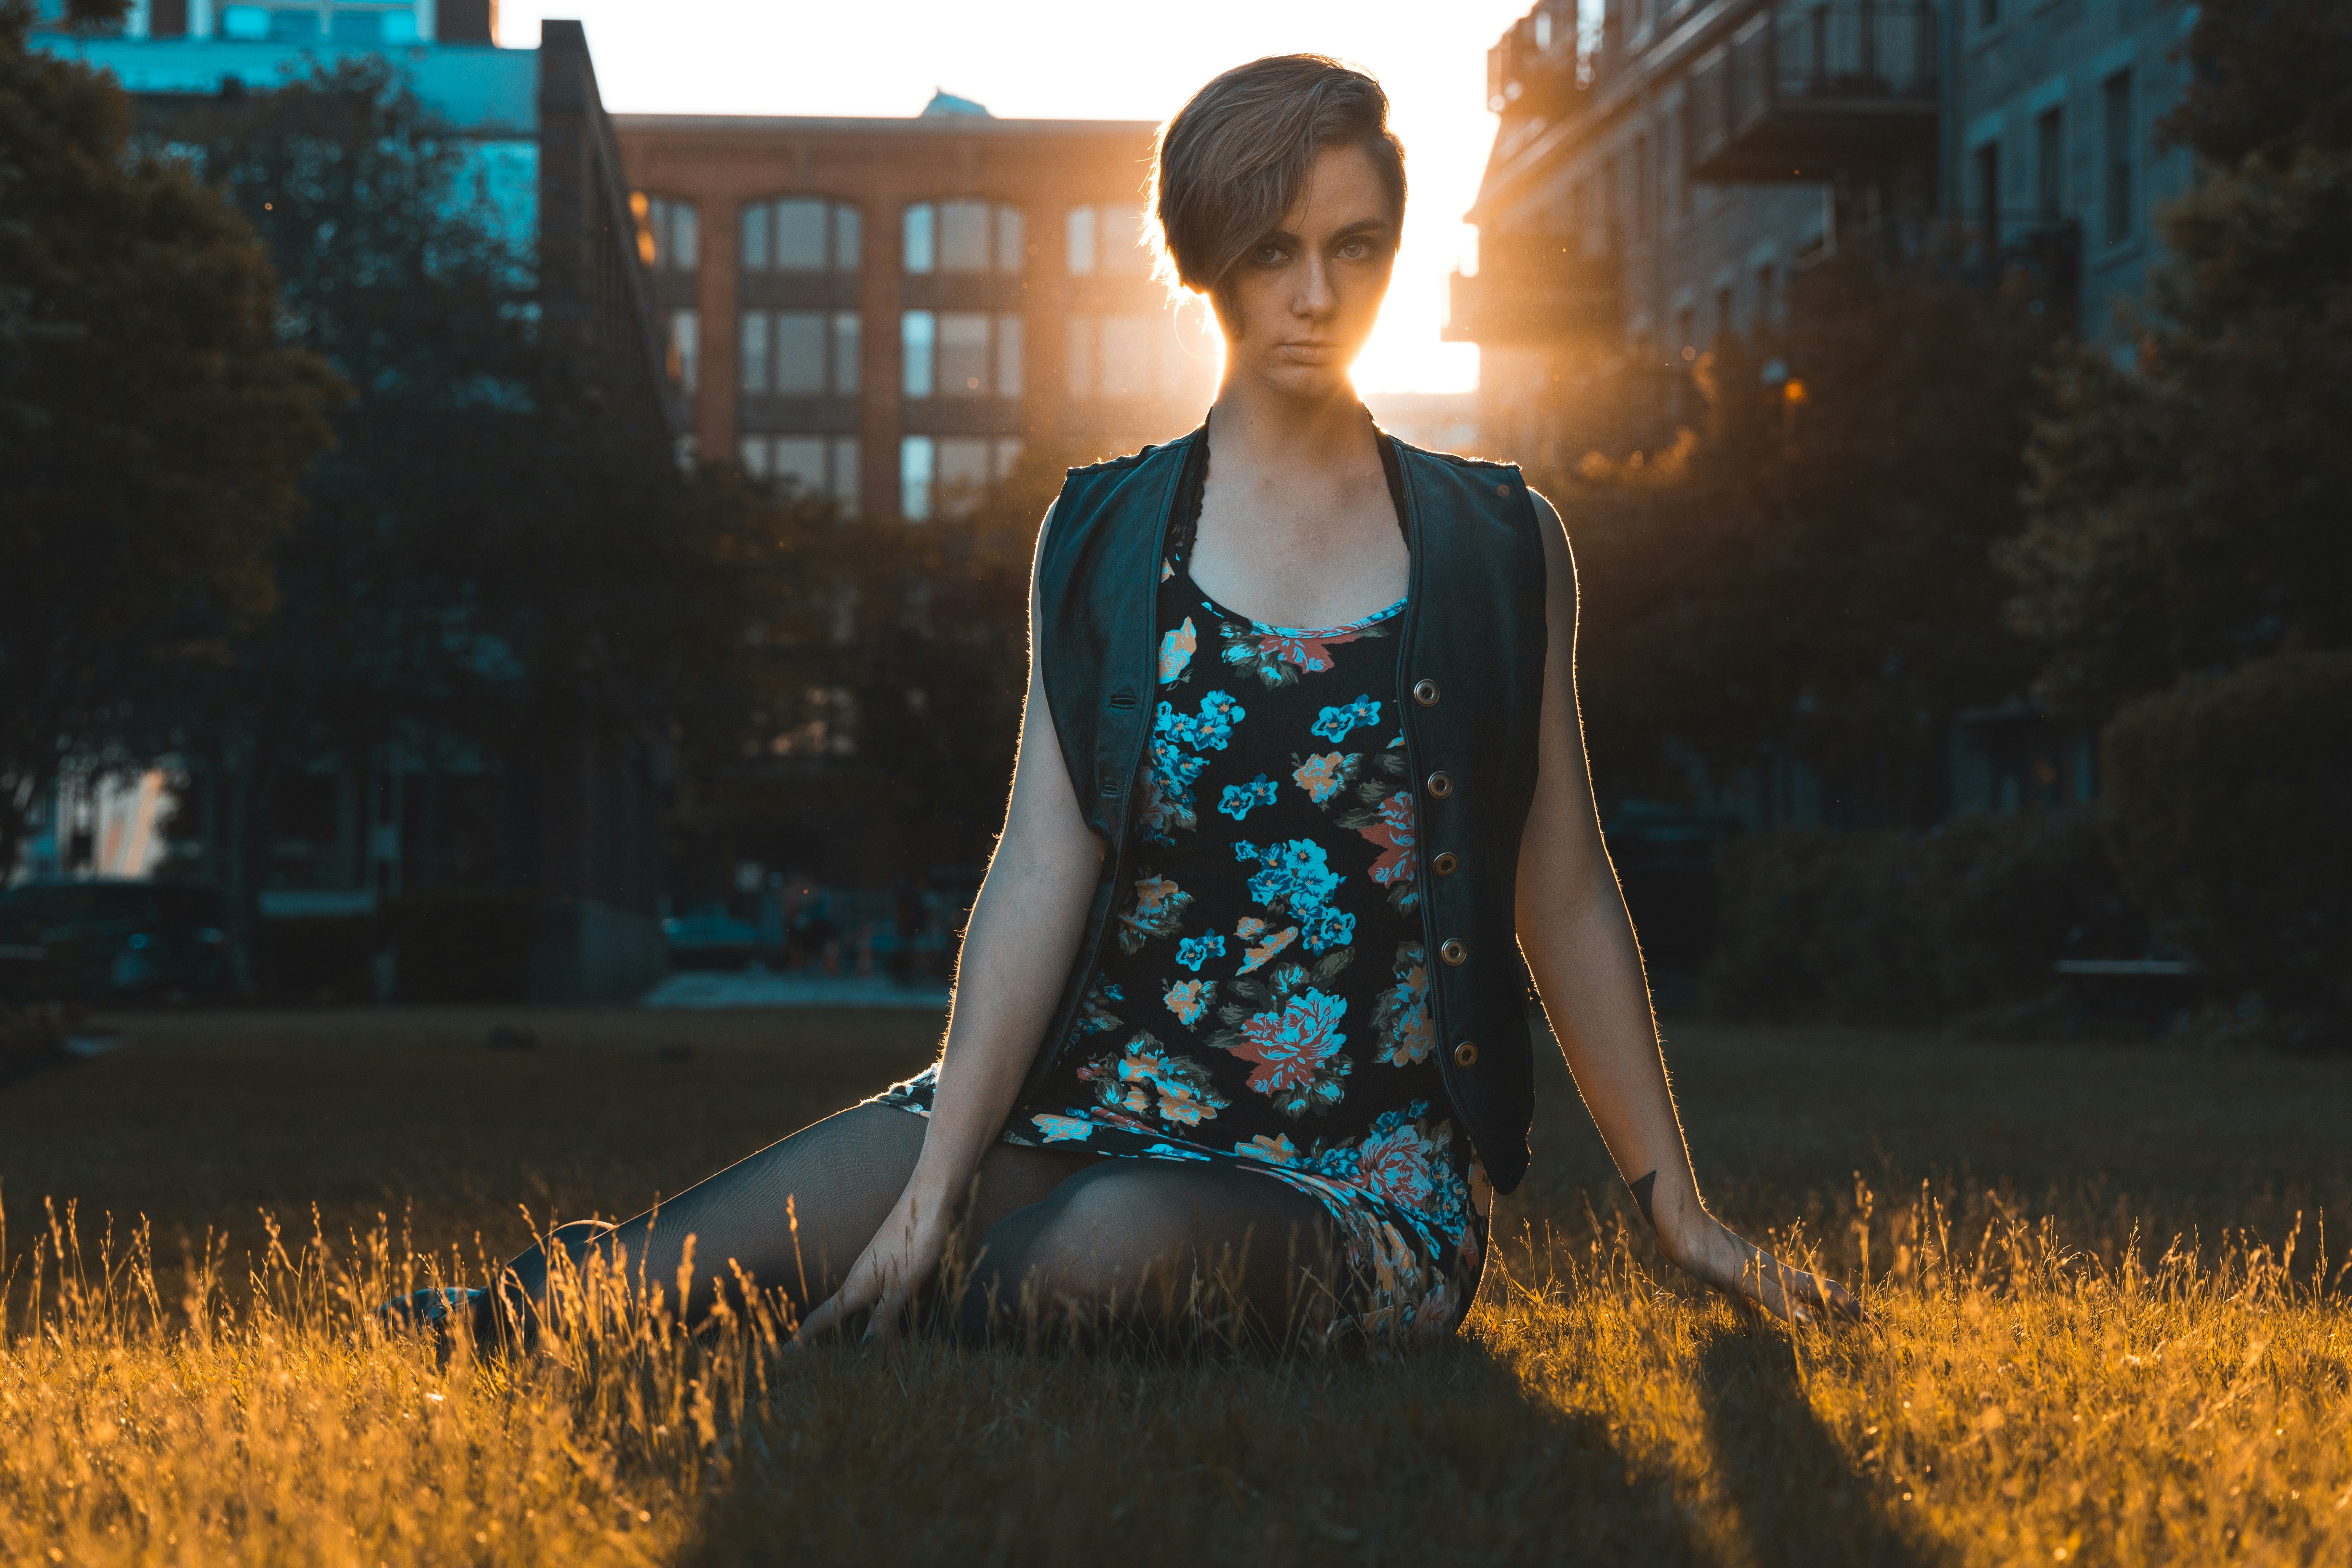 woman sitting on grass field